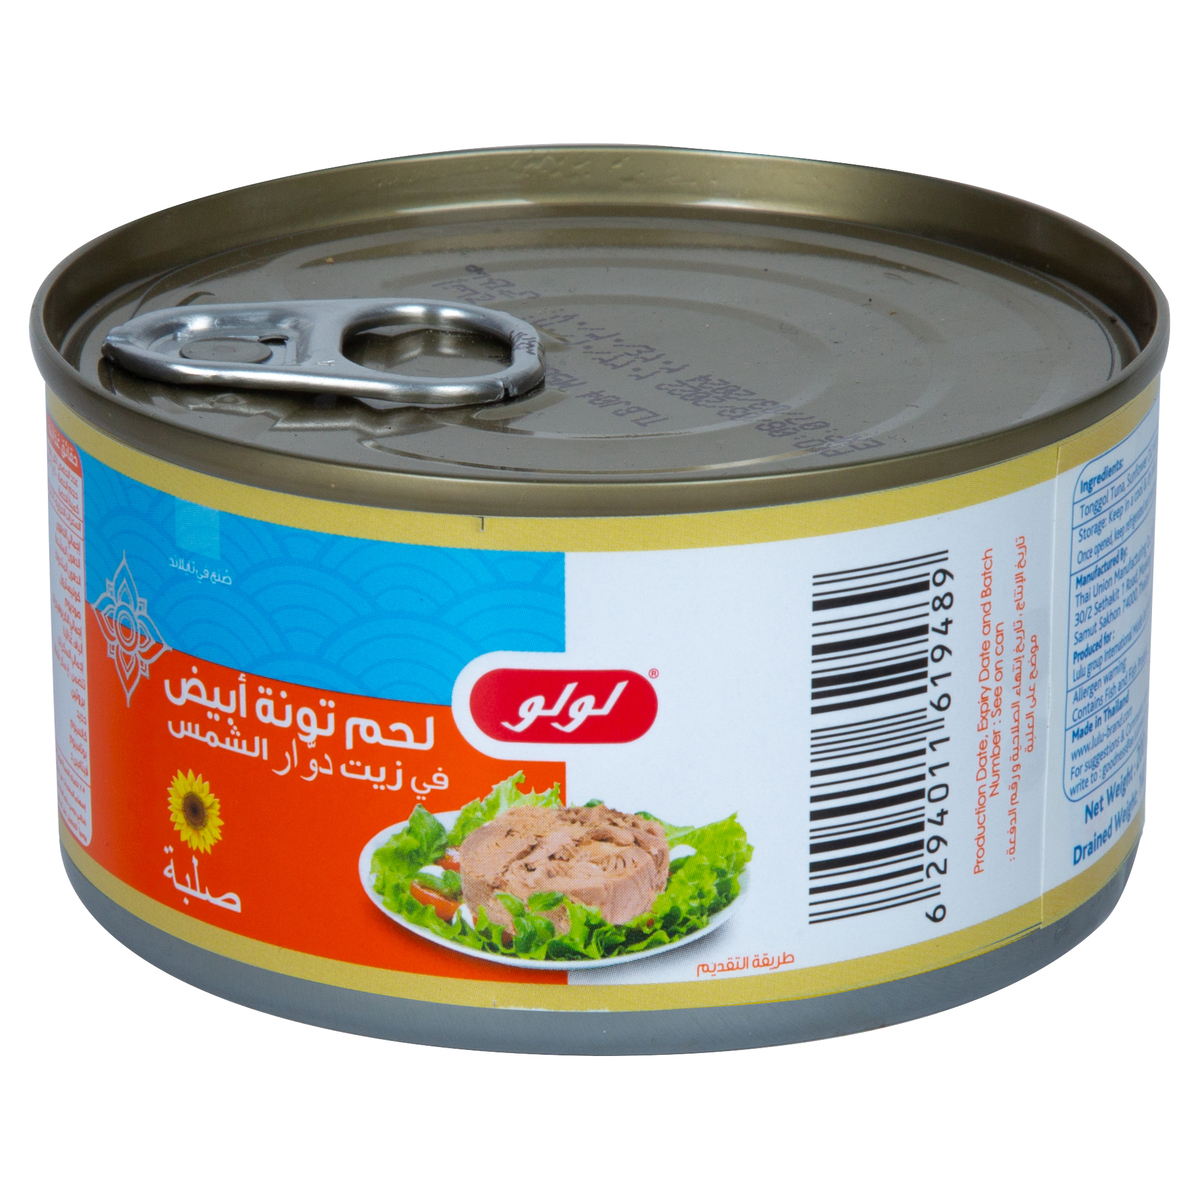 LuLu White Meat Tuna Solid in Sunflower Oil 200 g